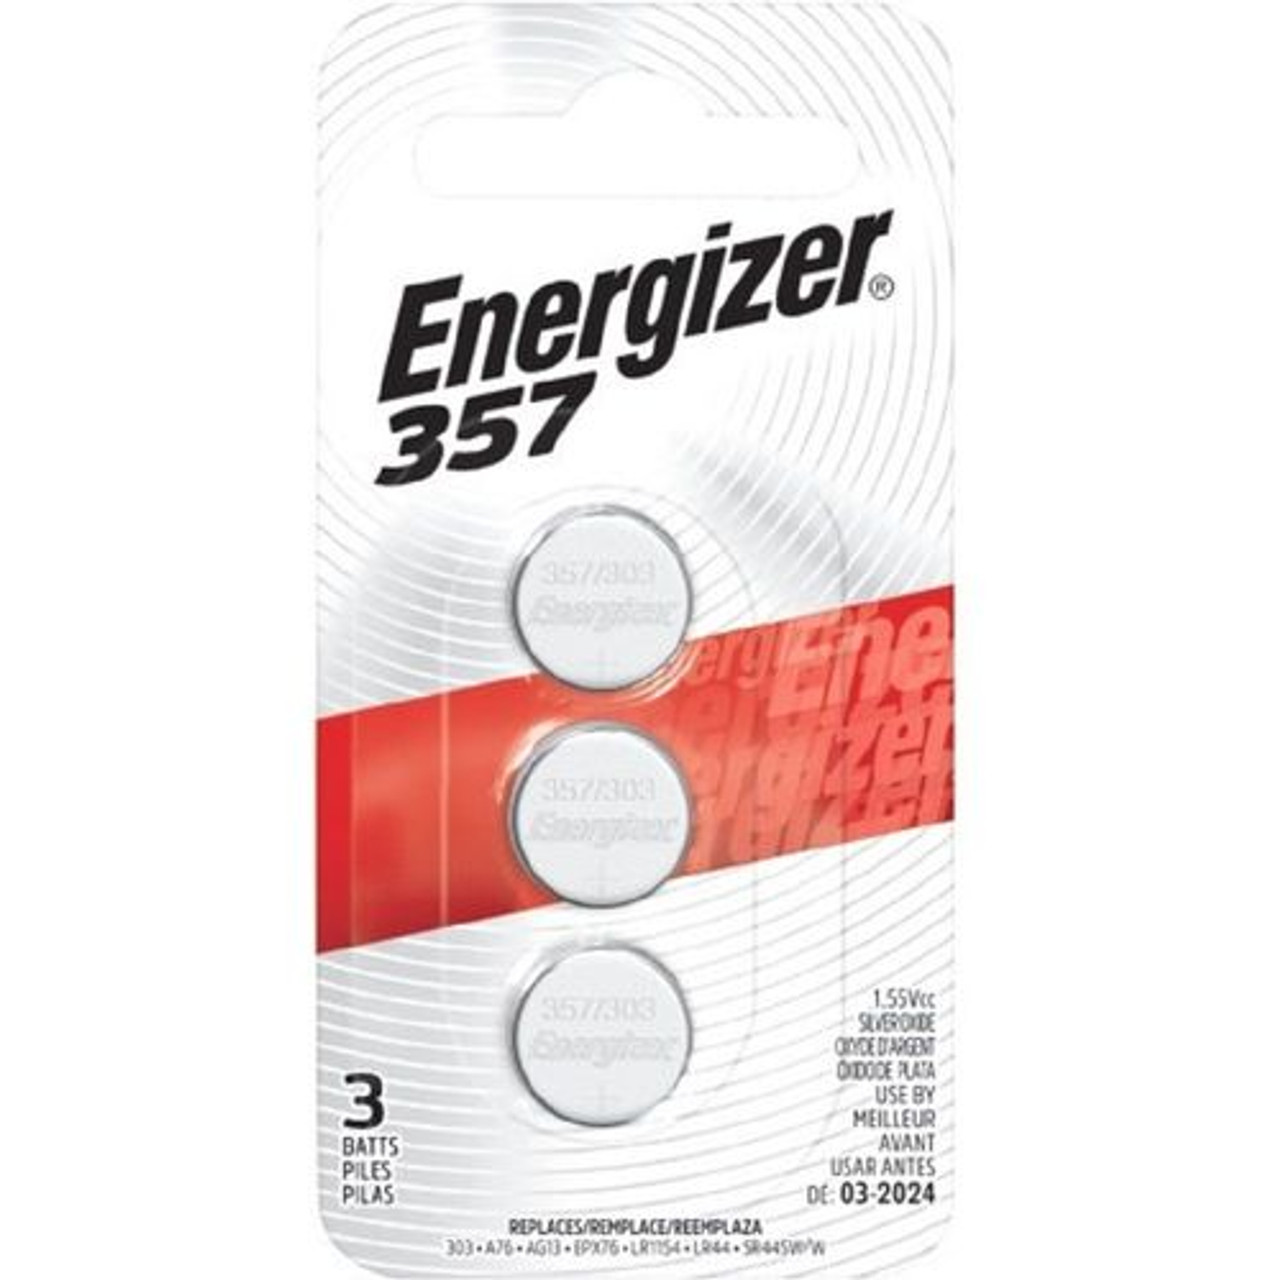 Energizer - 357 Batteries (3-Pack)